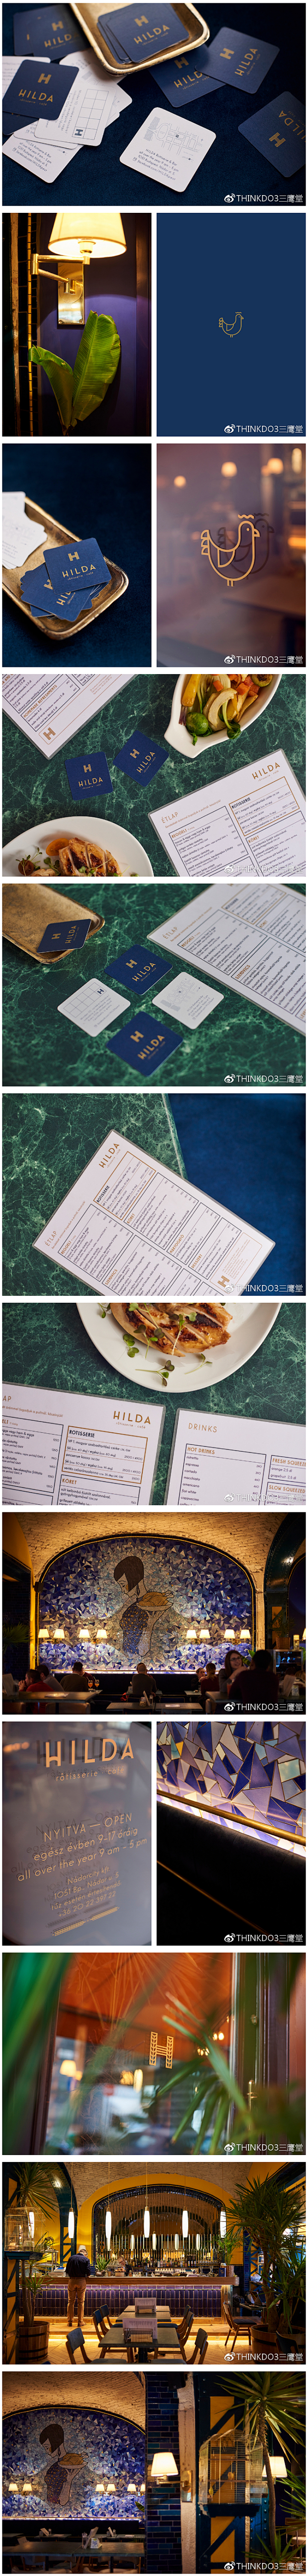 HILDA布达佩斯烤肉餐厅品牌视觉设计